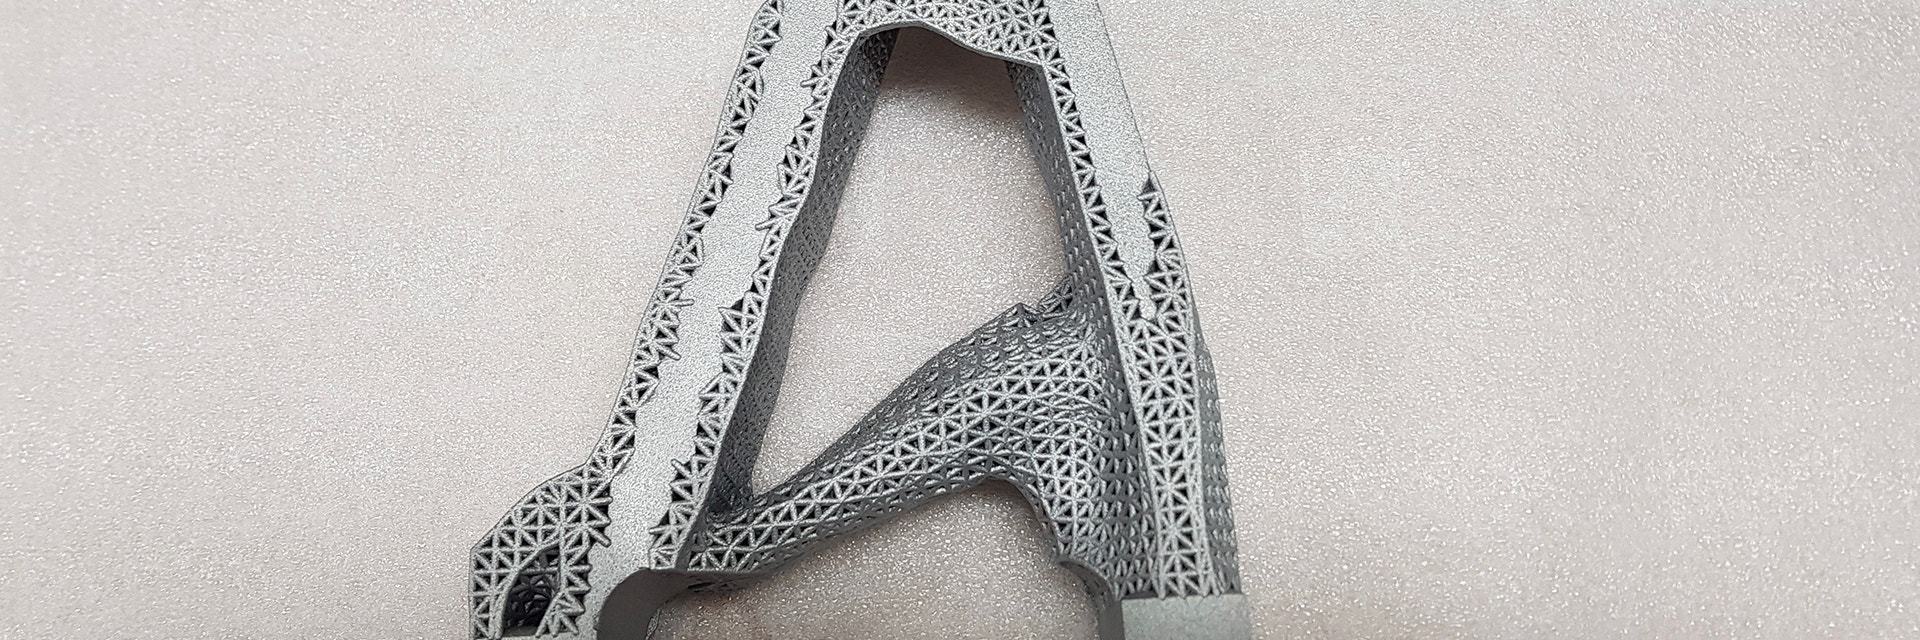 Triangular metal 3D-printed aerospace part with lattice structure 